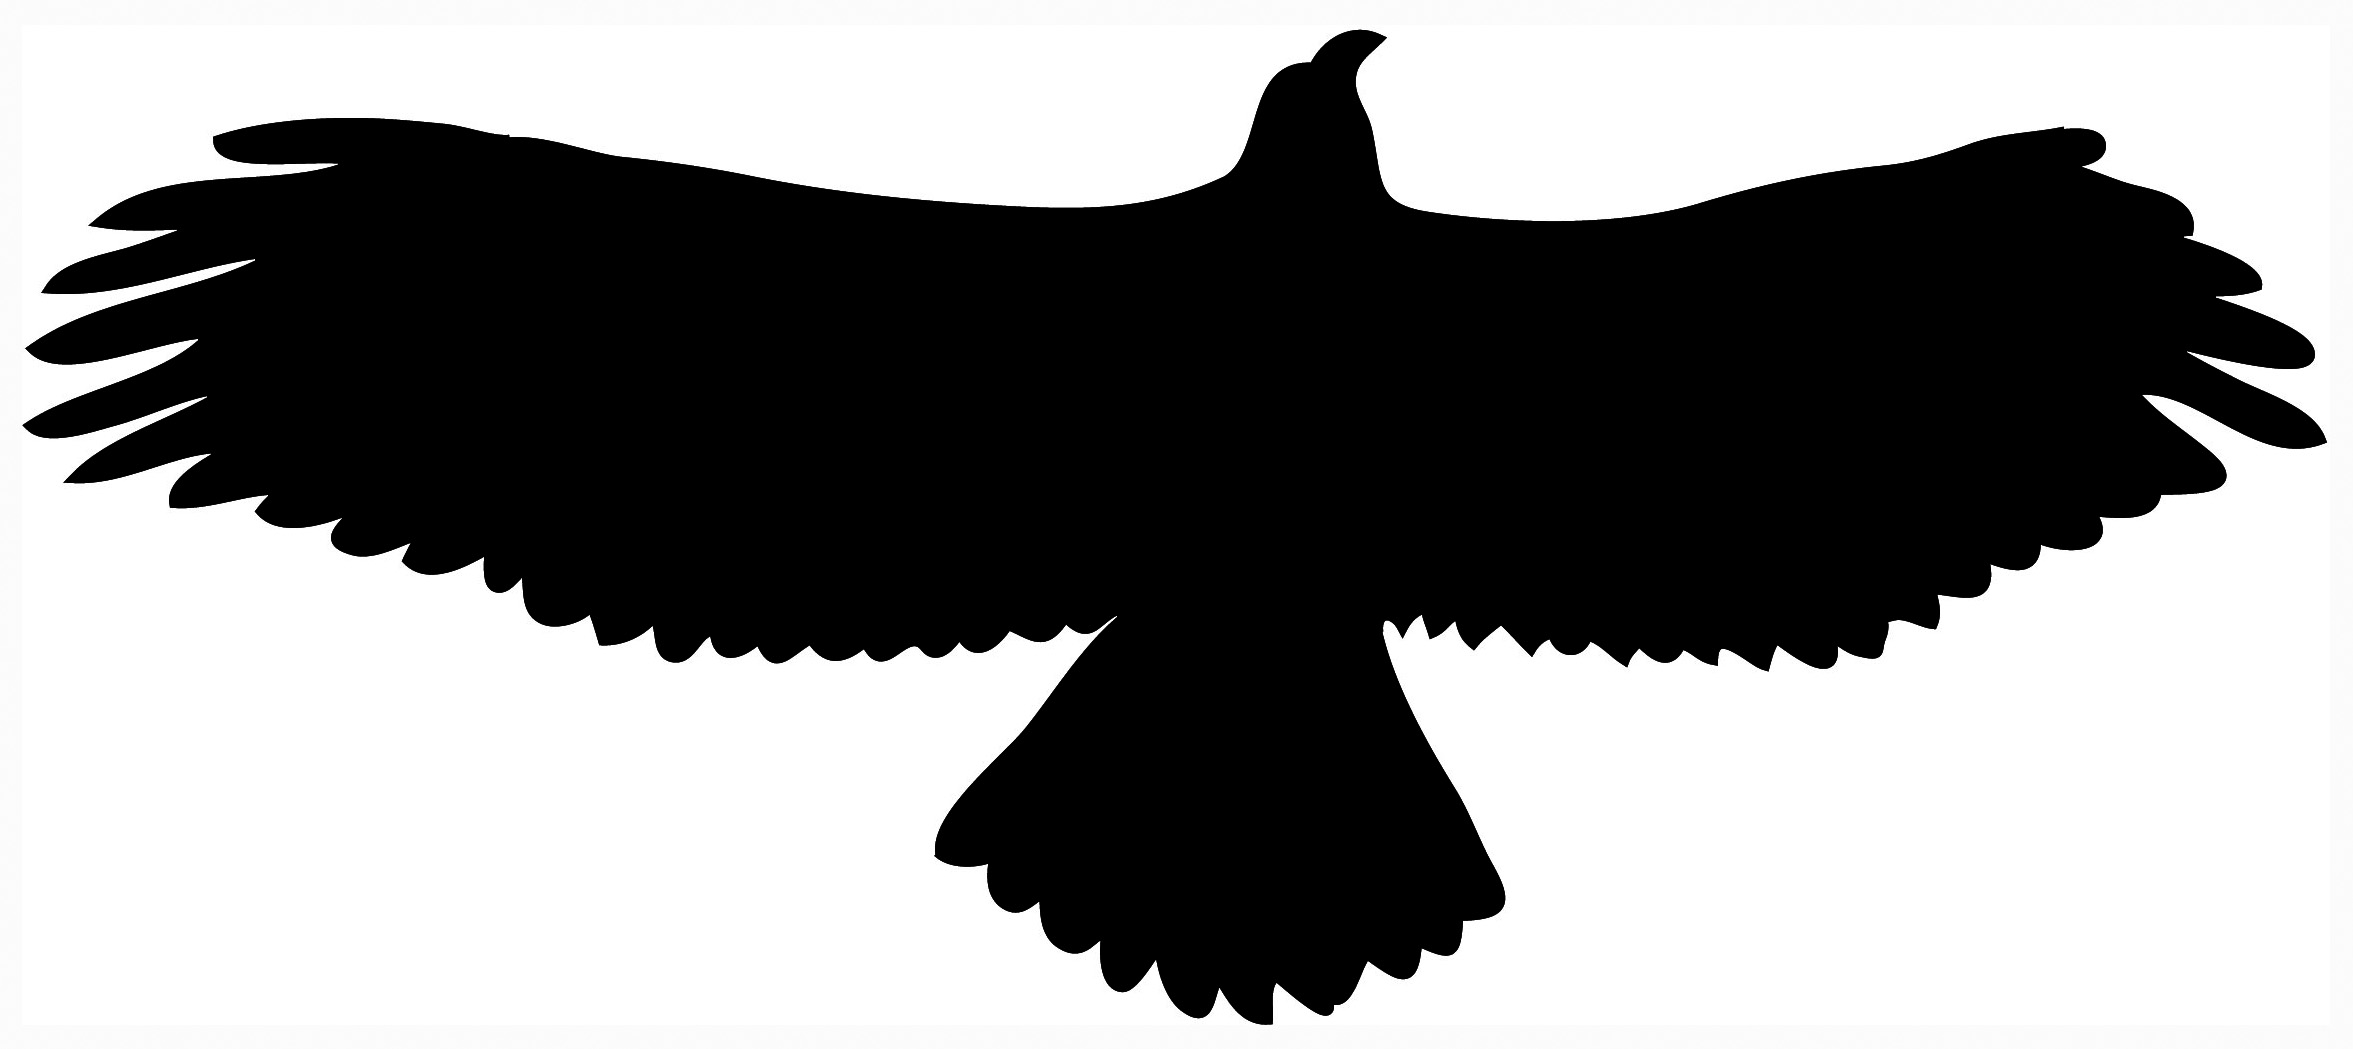 Eagle silhouette clipart